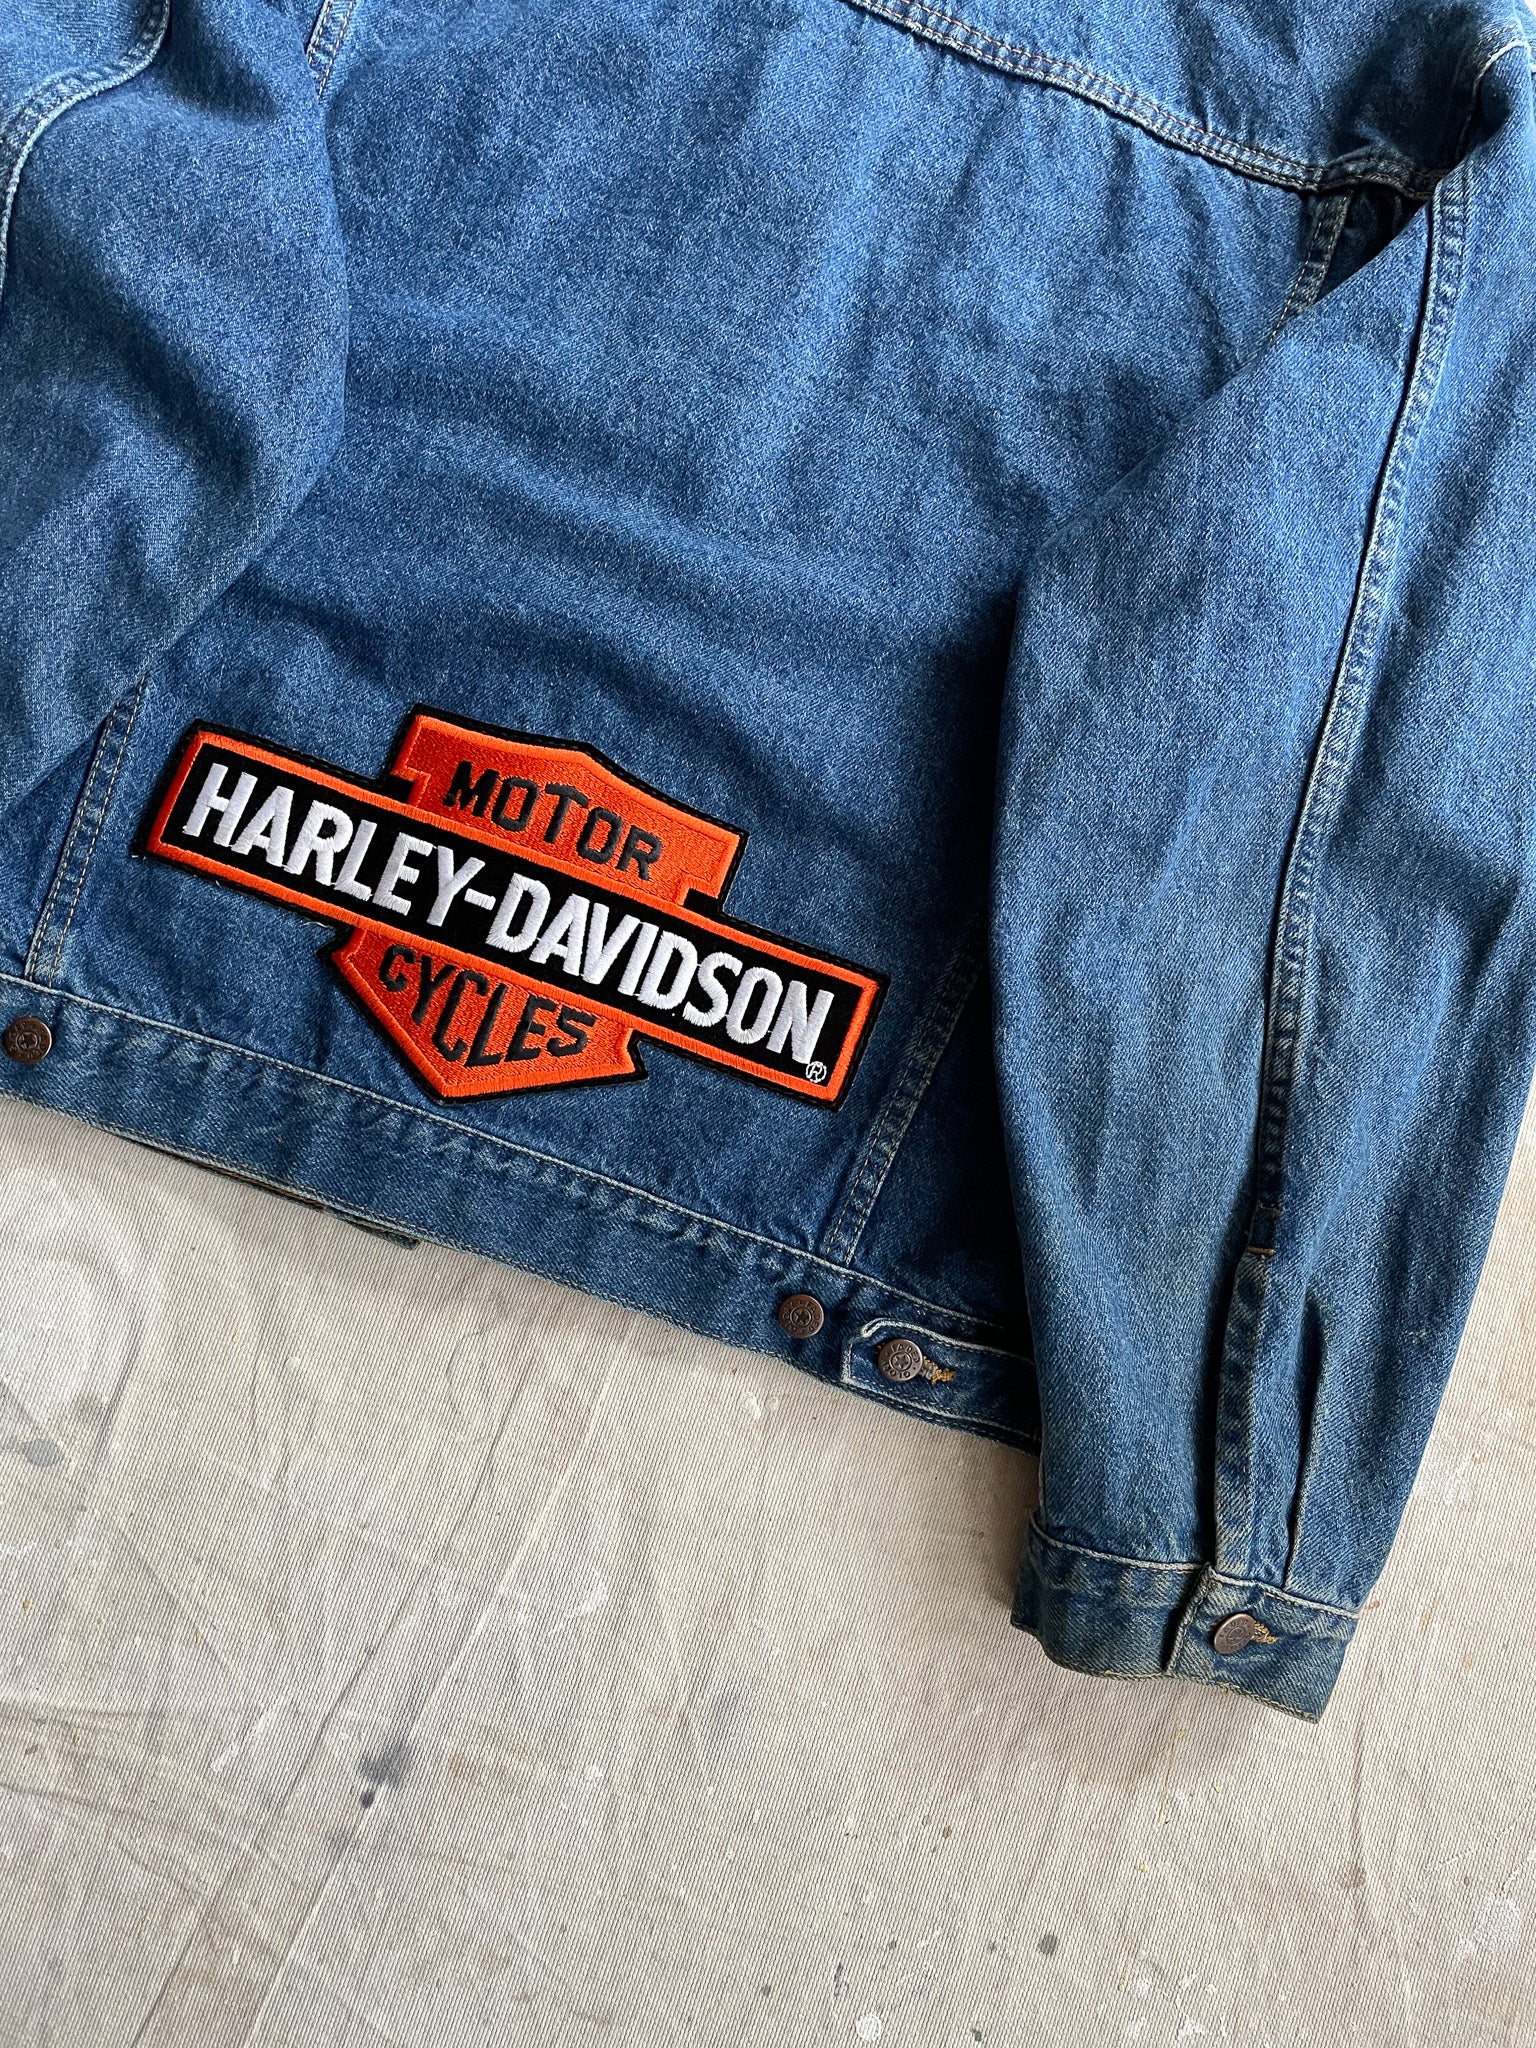 Harley Davidson Men’s Denim Vest Jean Biker Jacket w/Patches Size XL X-Large